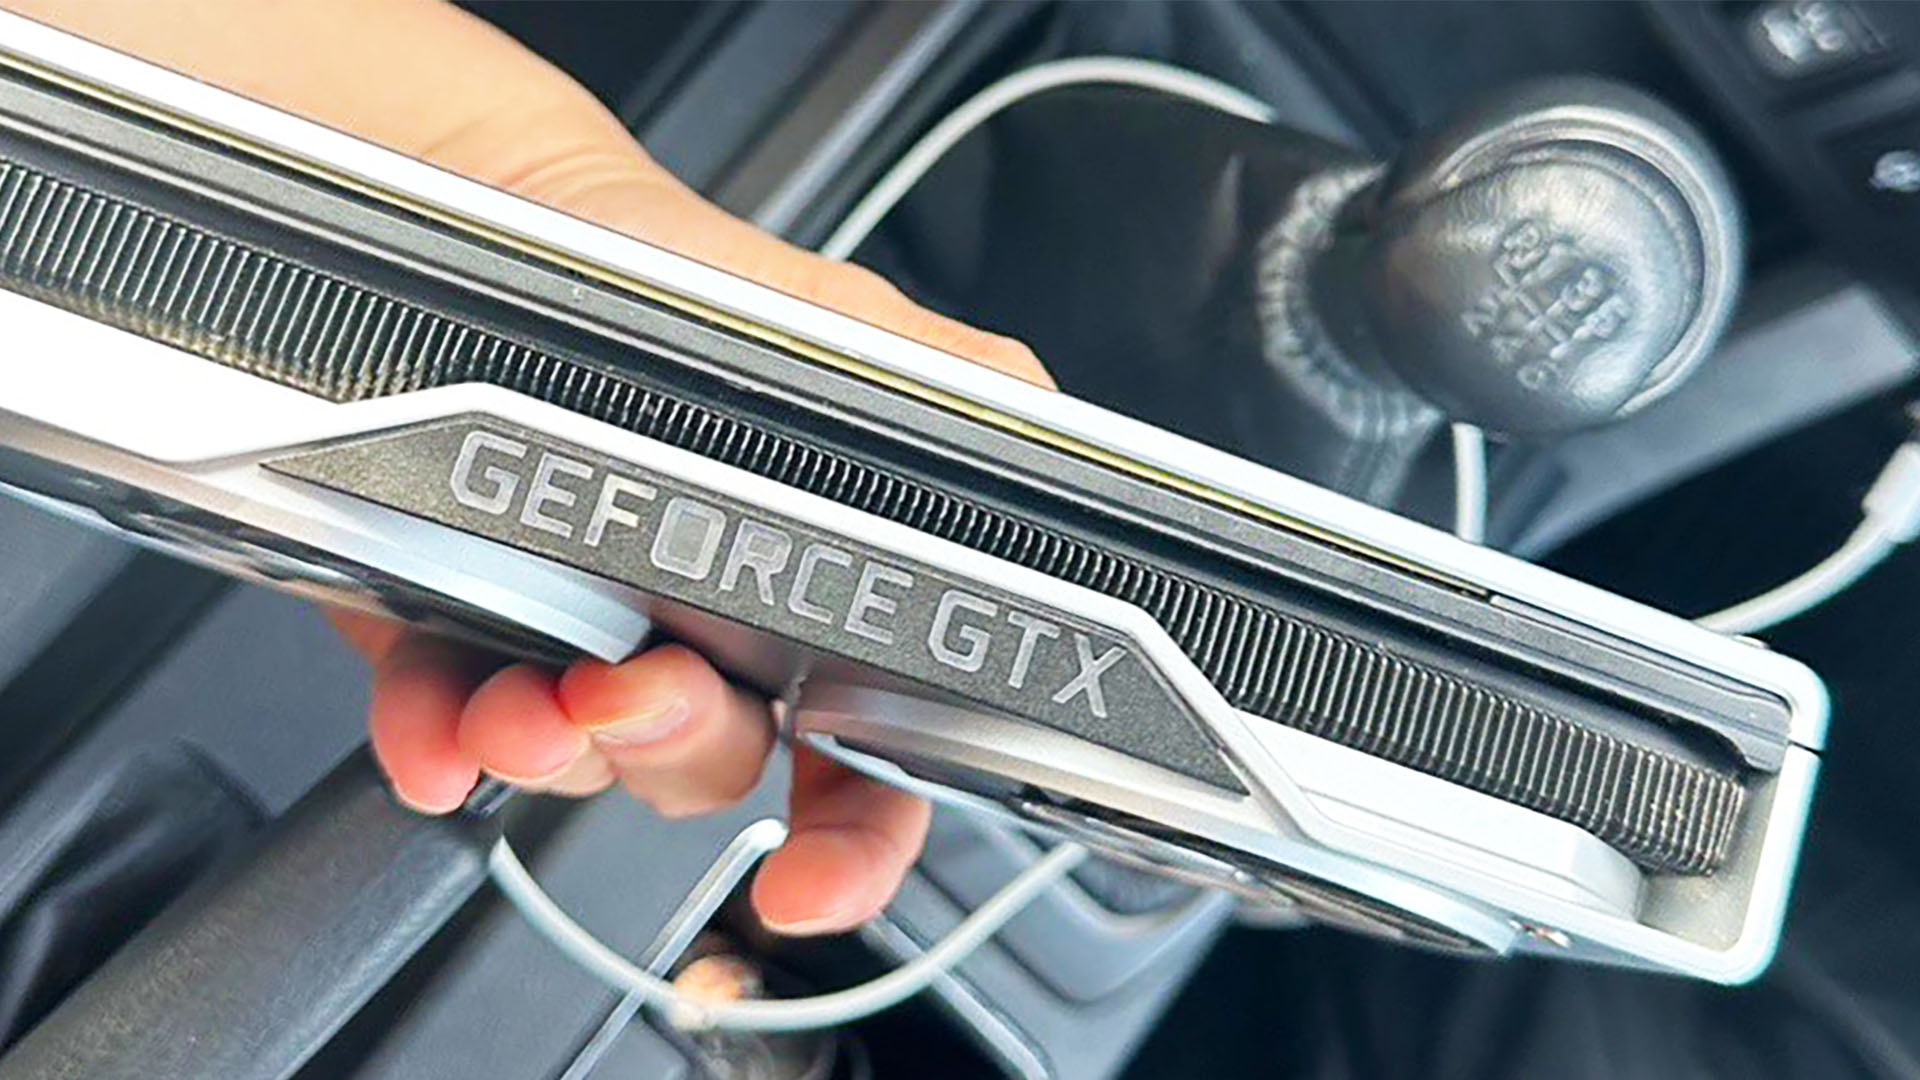 This Nvidia GeForce GTX 2070 (yes, GTX) GPU just got benchmarked